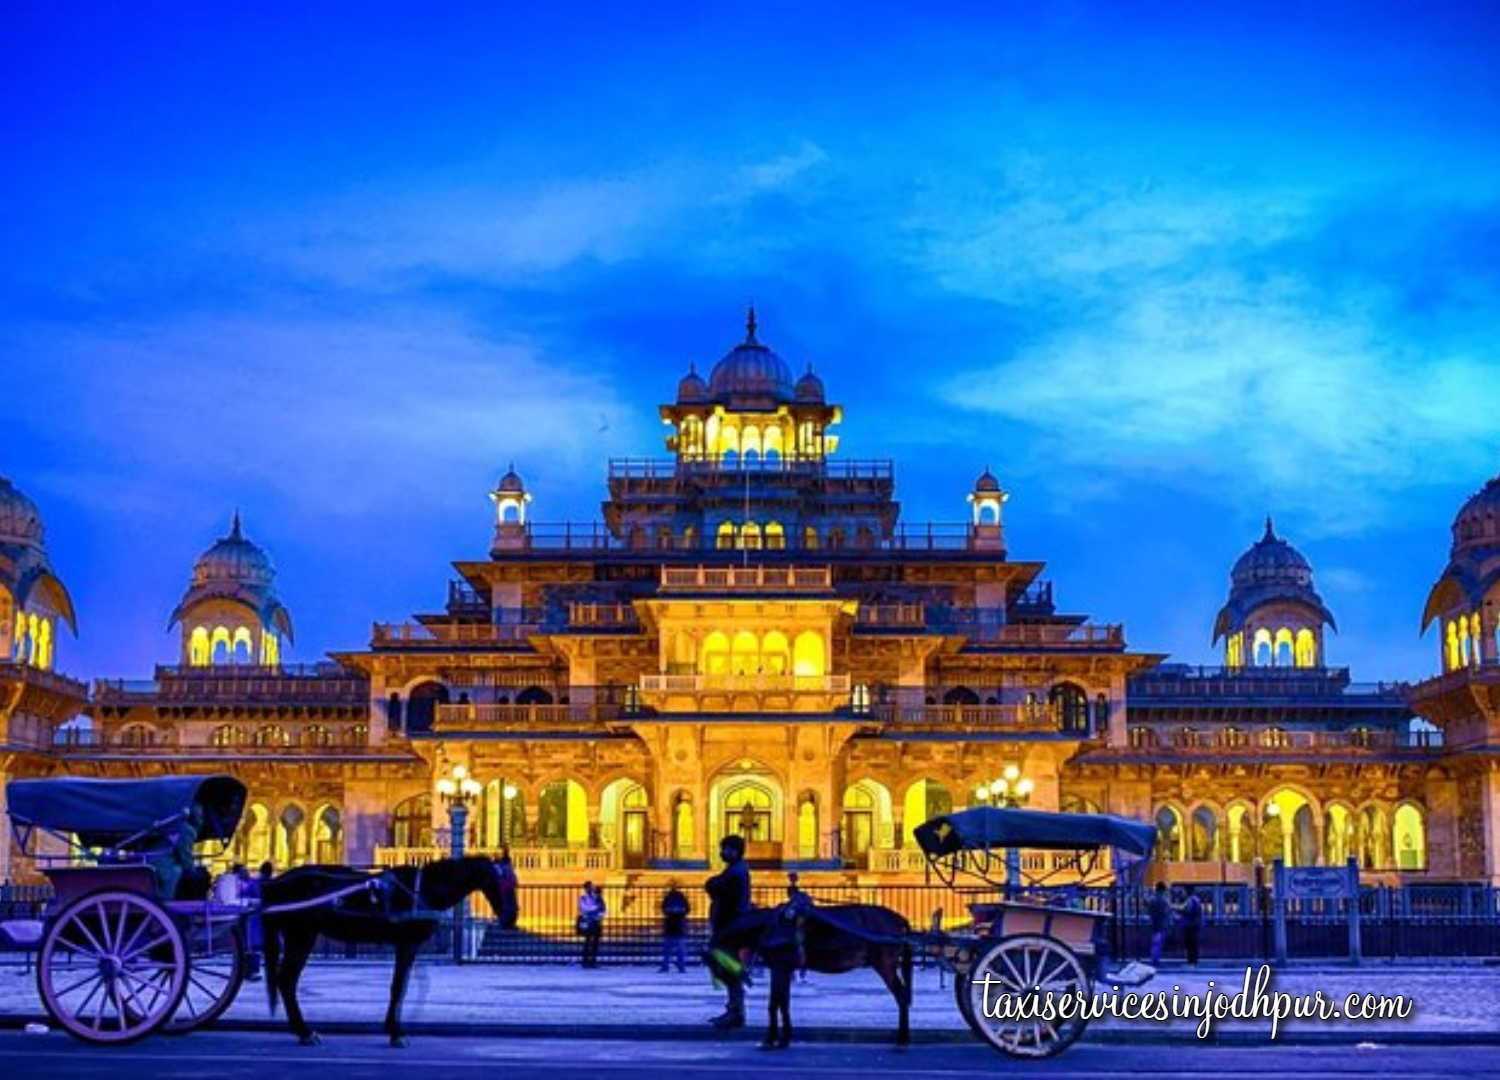 albert hall museum jaipur, top 10 stunning photography locations in jaipur, jodhpur cabs